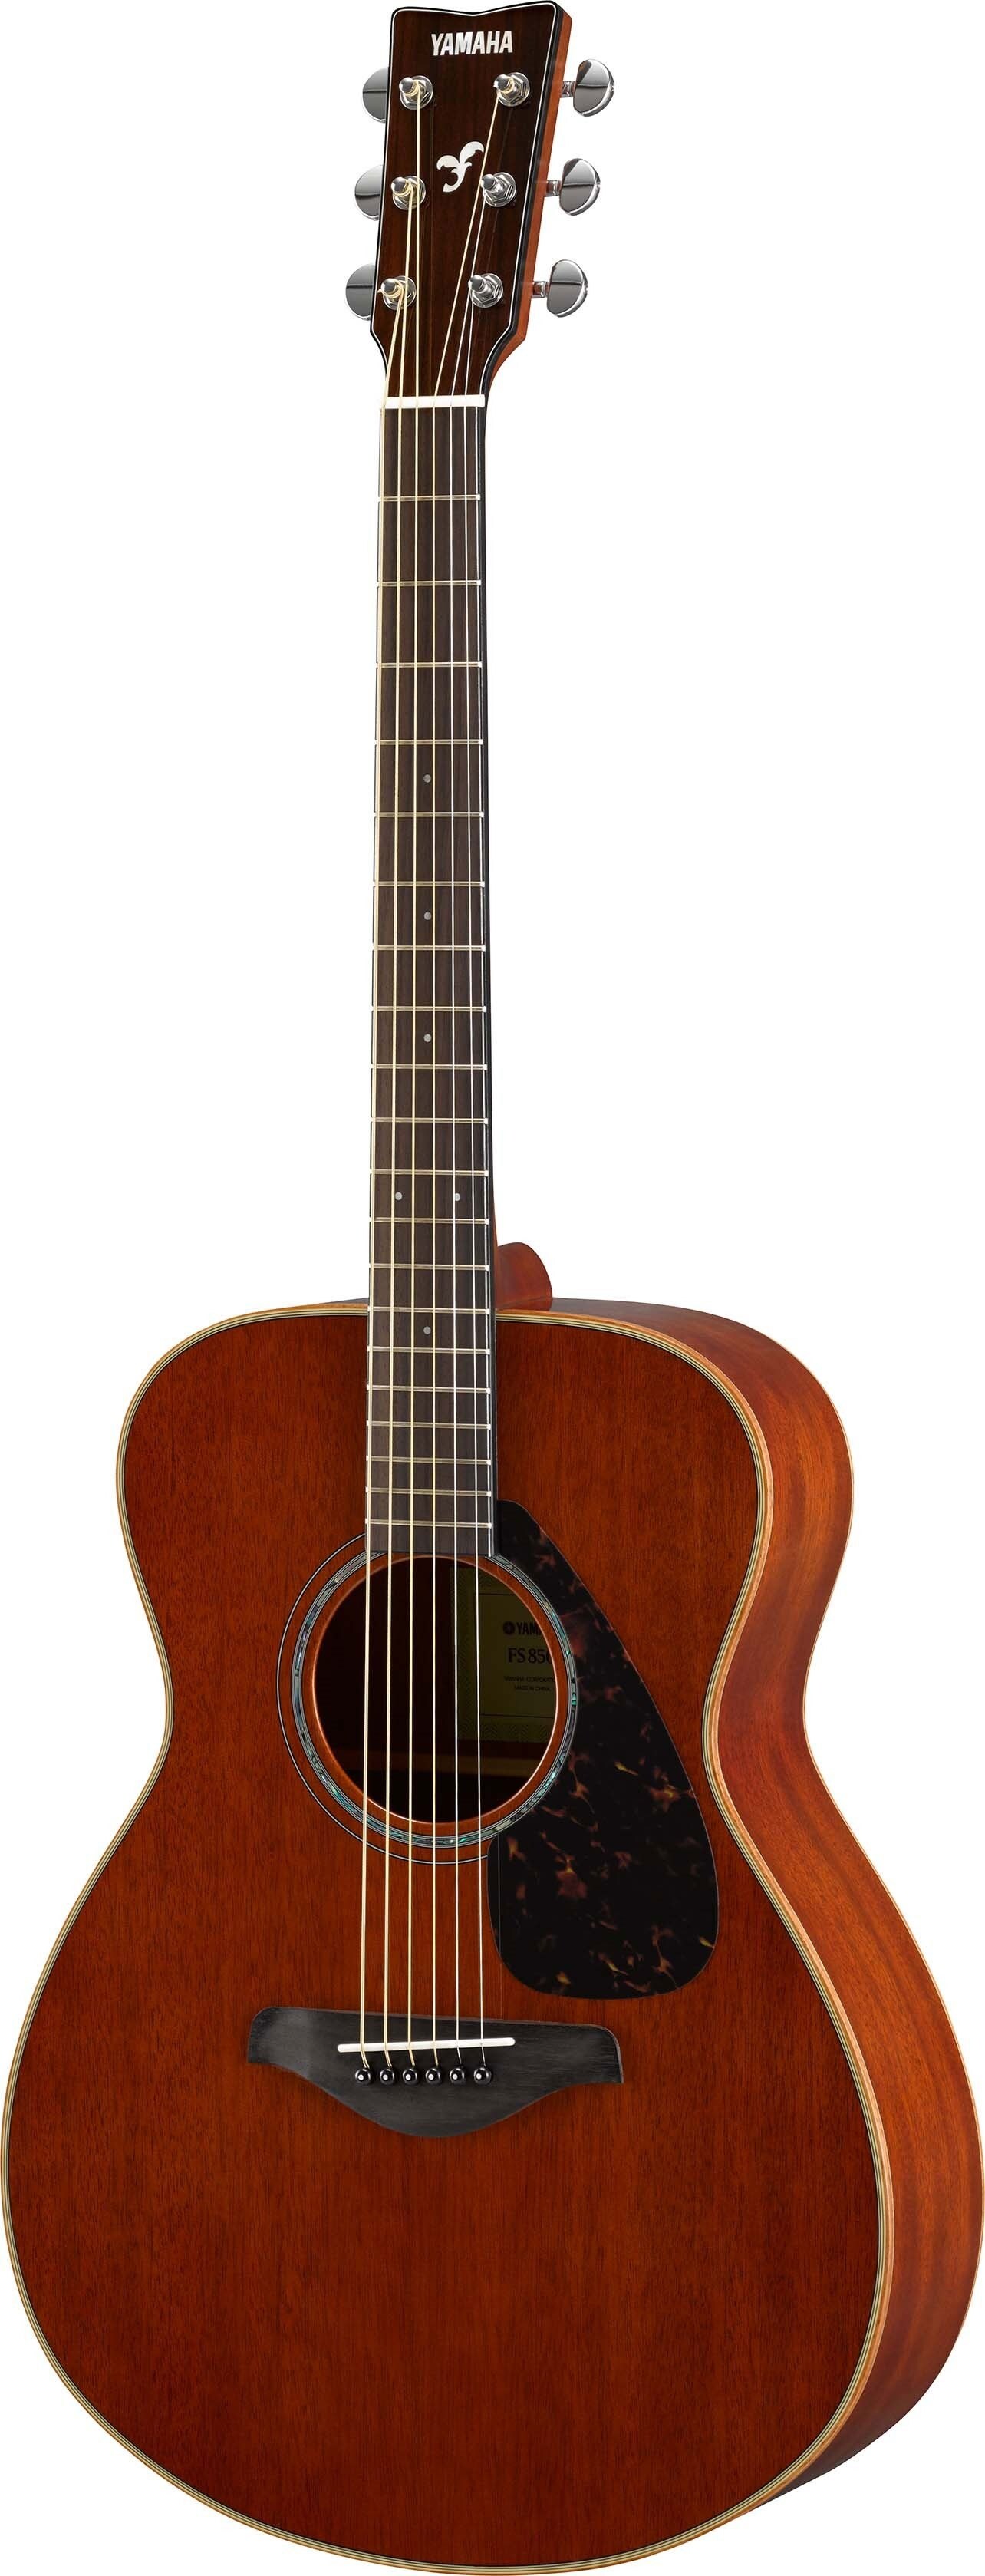 Se Yamaha FS850 NT Western Guitar (Maghoni) hos Allround Musik